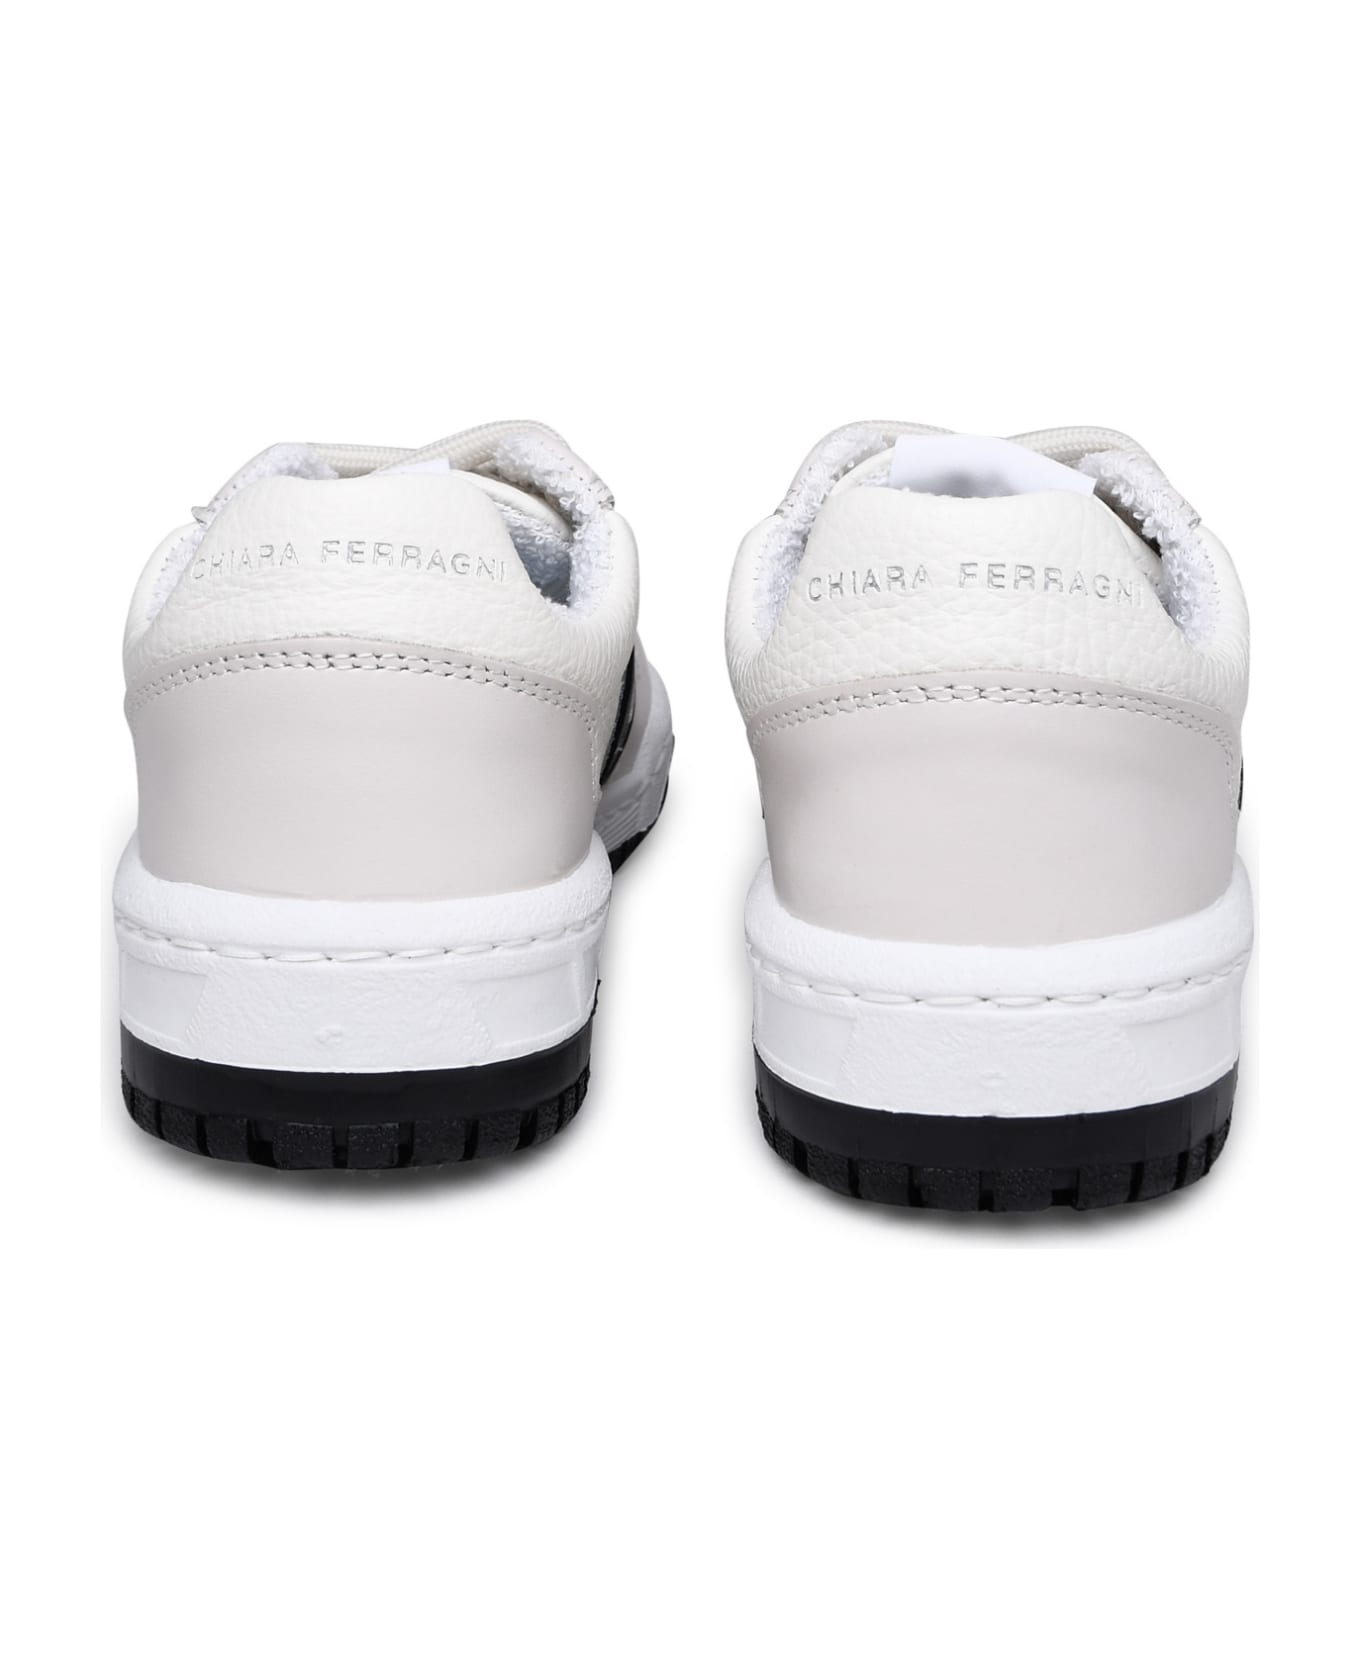 Chiara Ferragni Cf1 White Leather Sneakers - White